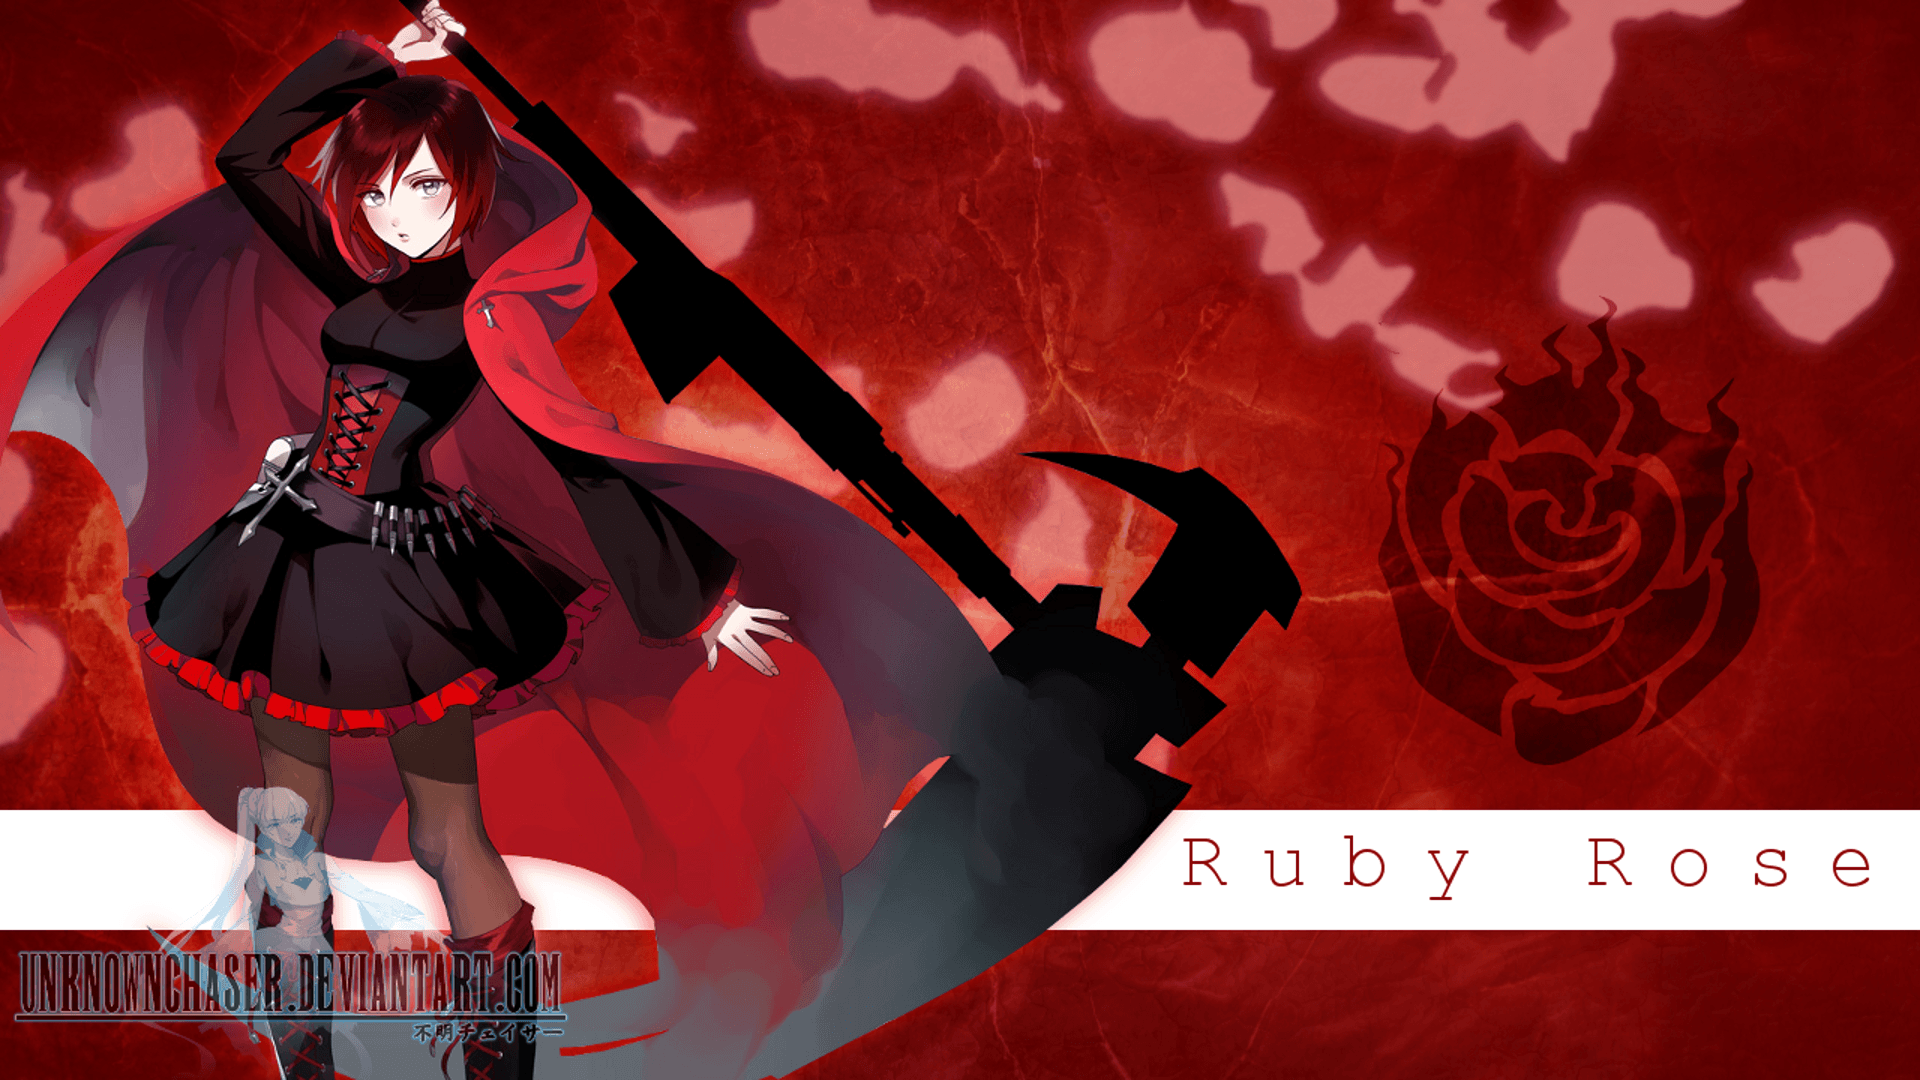 Ruby rose by RWBY Anime Wallpaper 2k Quad HD ID2854